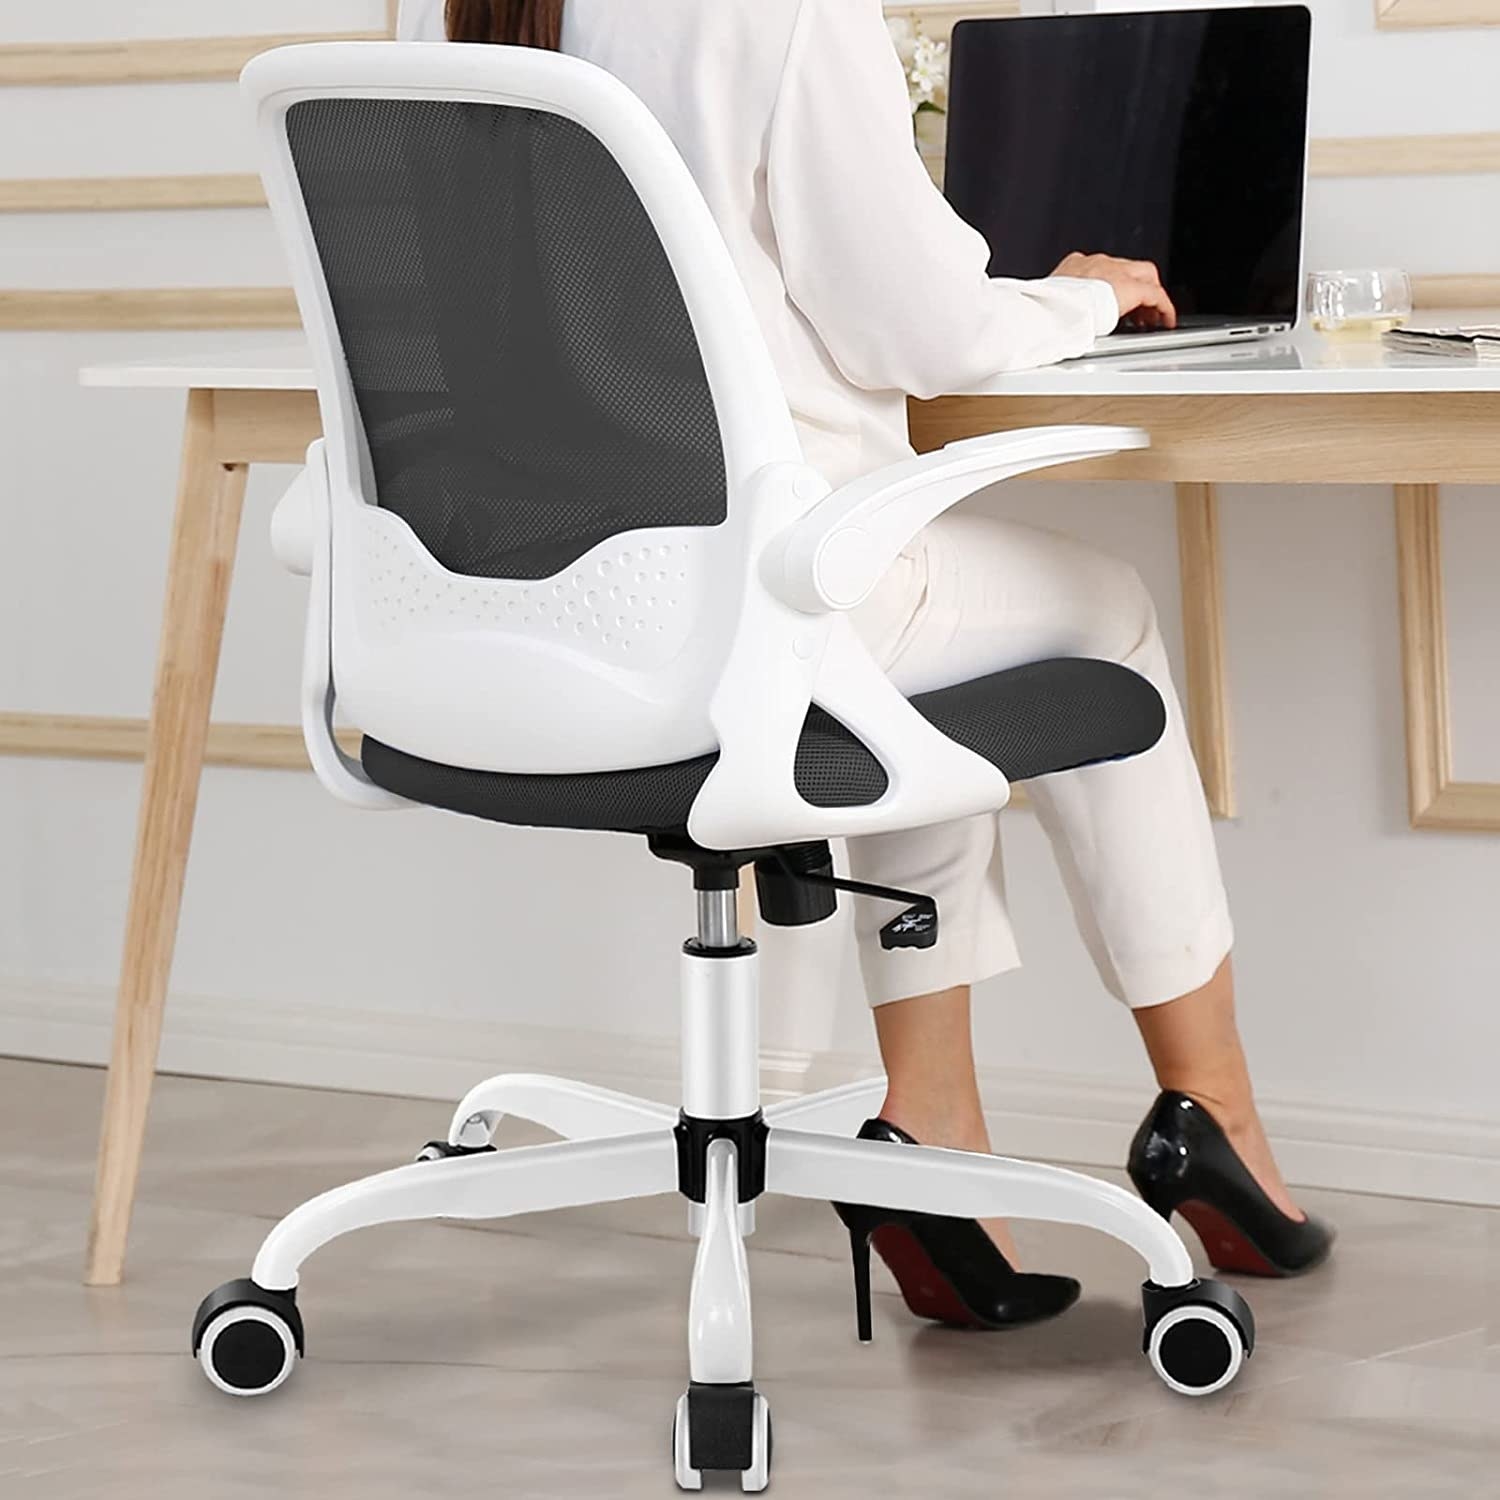 model sitting in desk chair